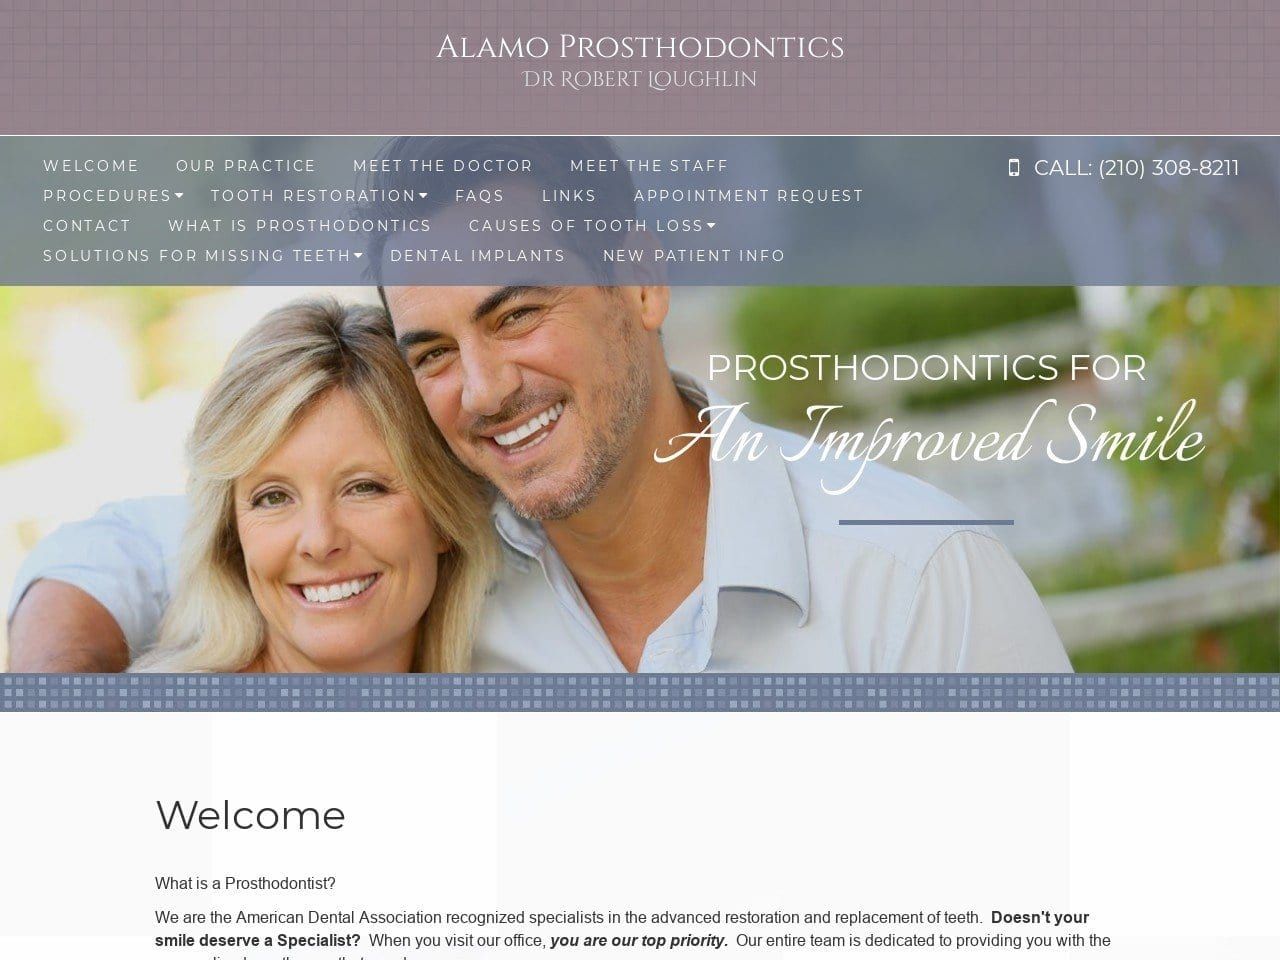 Alamo Prosthodontics Website Screenshot from alamoprosthodontics.com